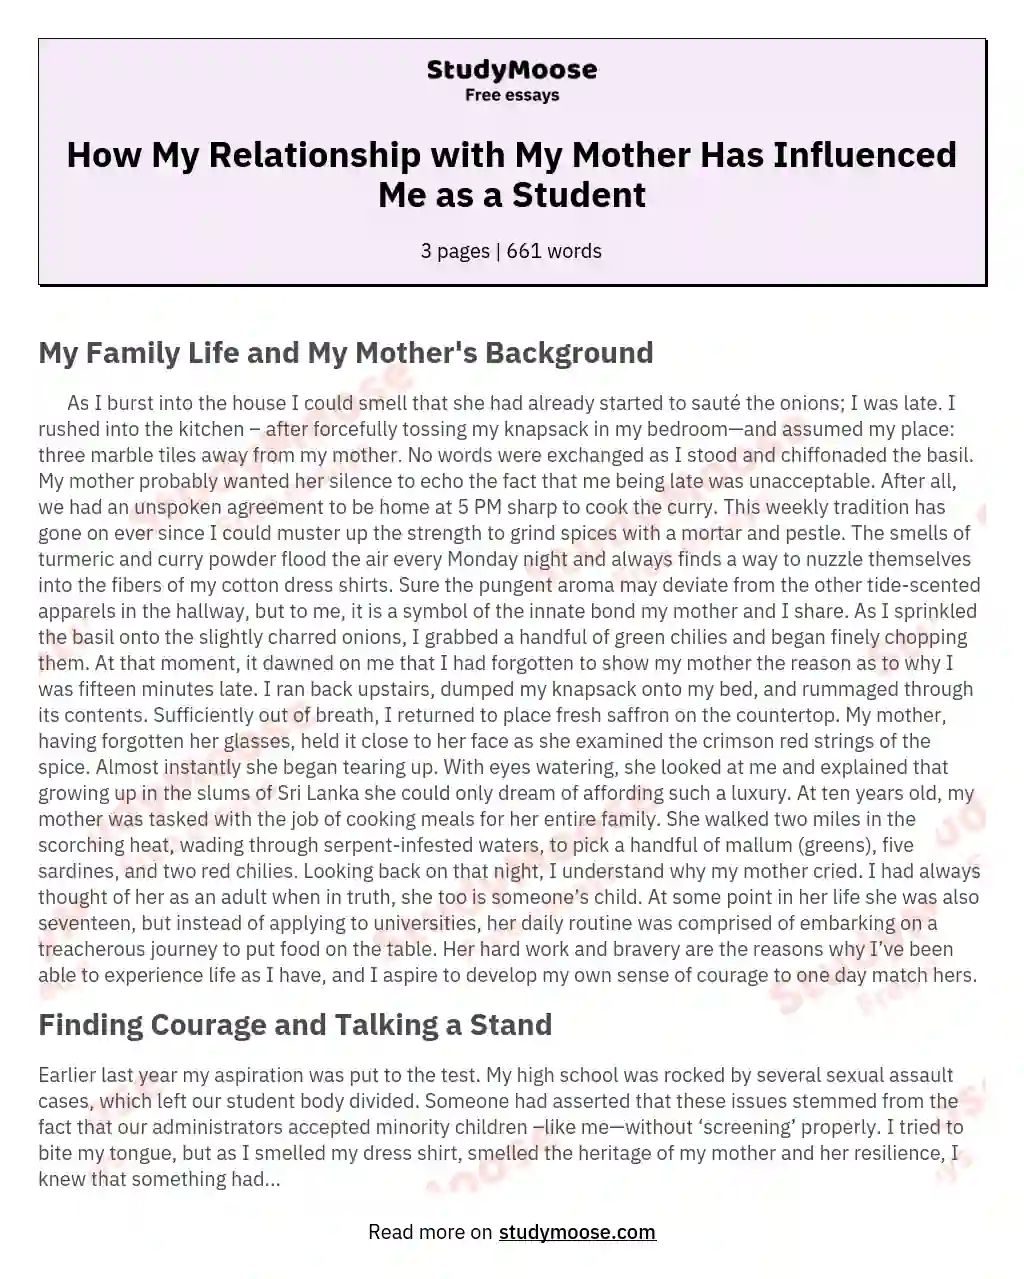 my mom influenced me essay